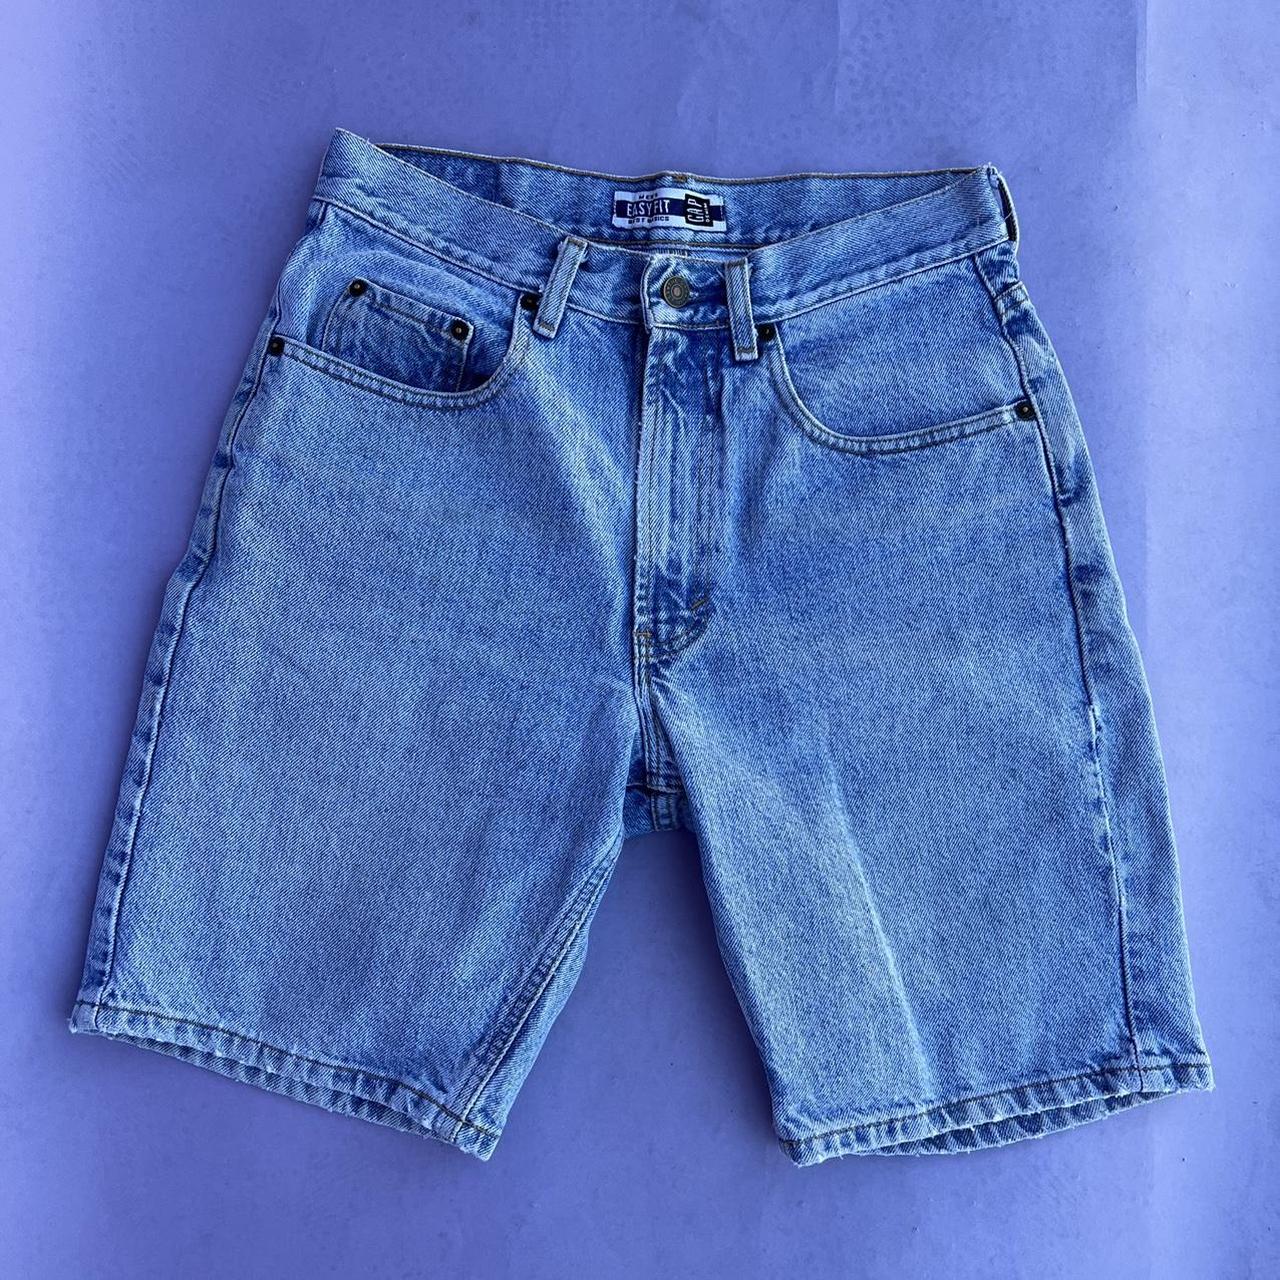 Vintage Gap baggy jean shorts 90s denim shorts by... - Depop